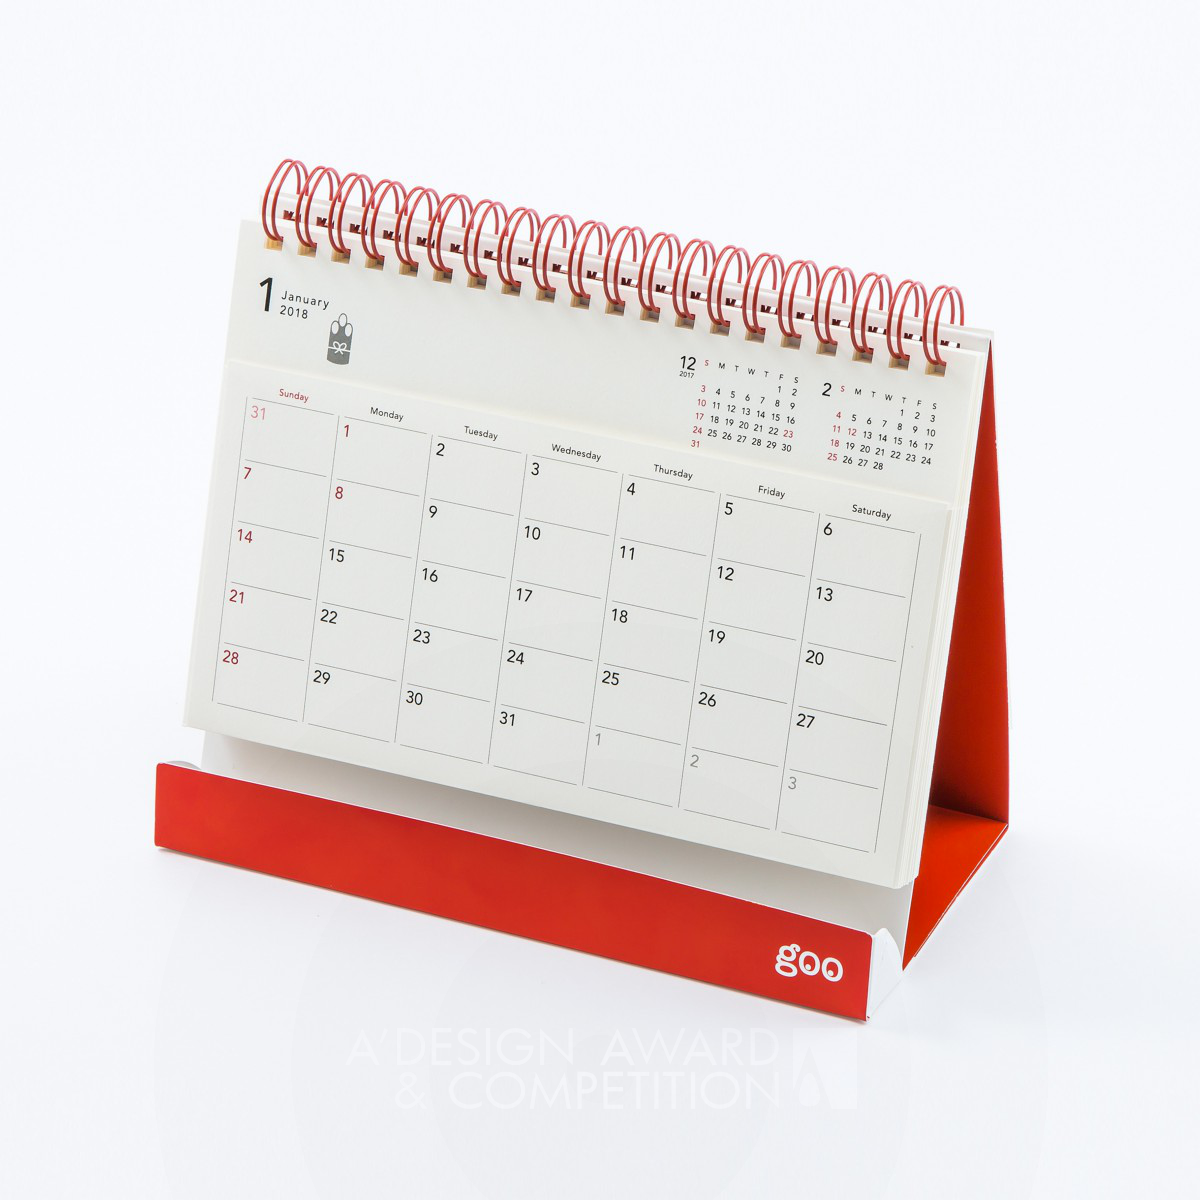 Stand By Calendar by Katsumi Tamura